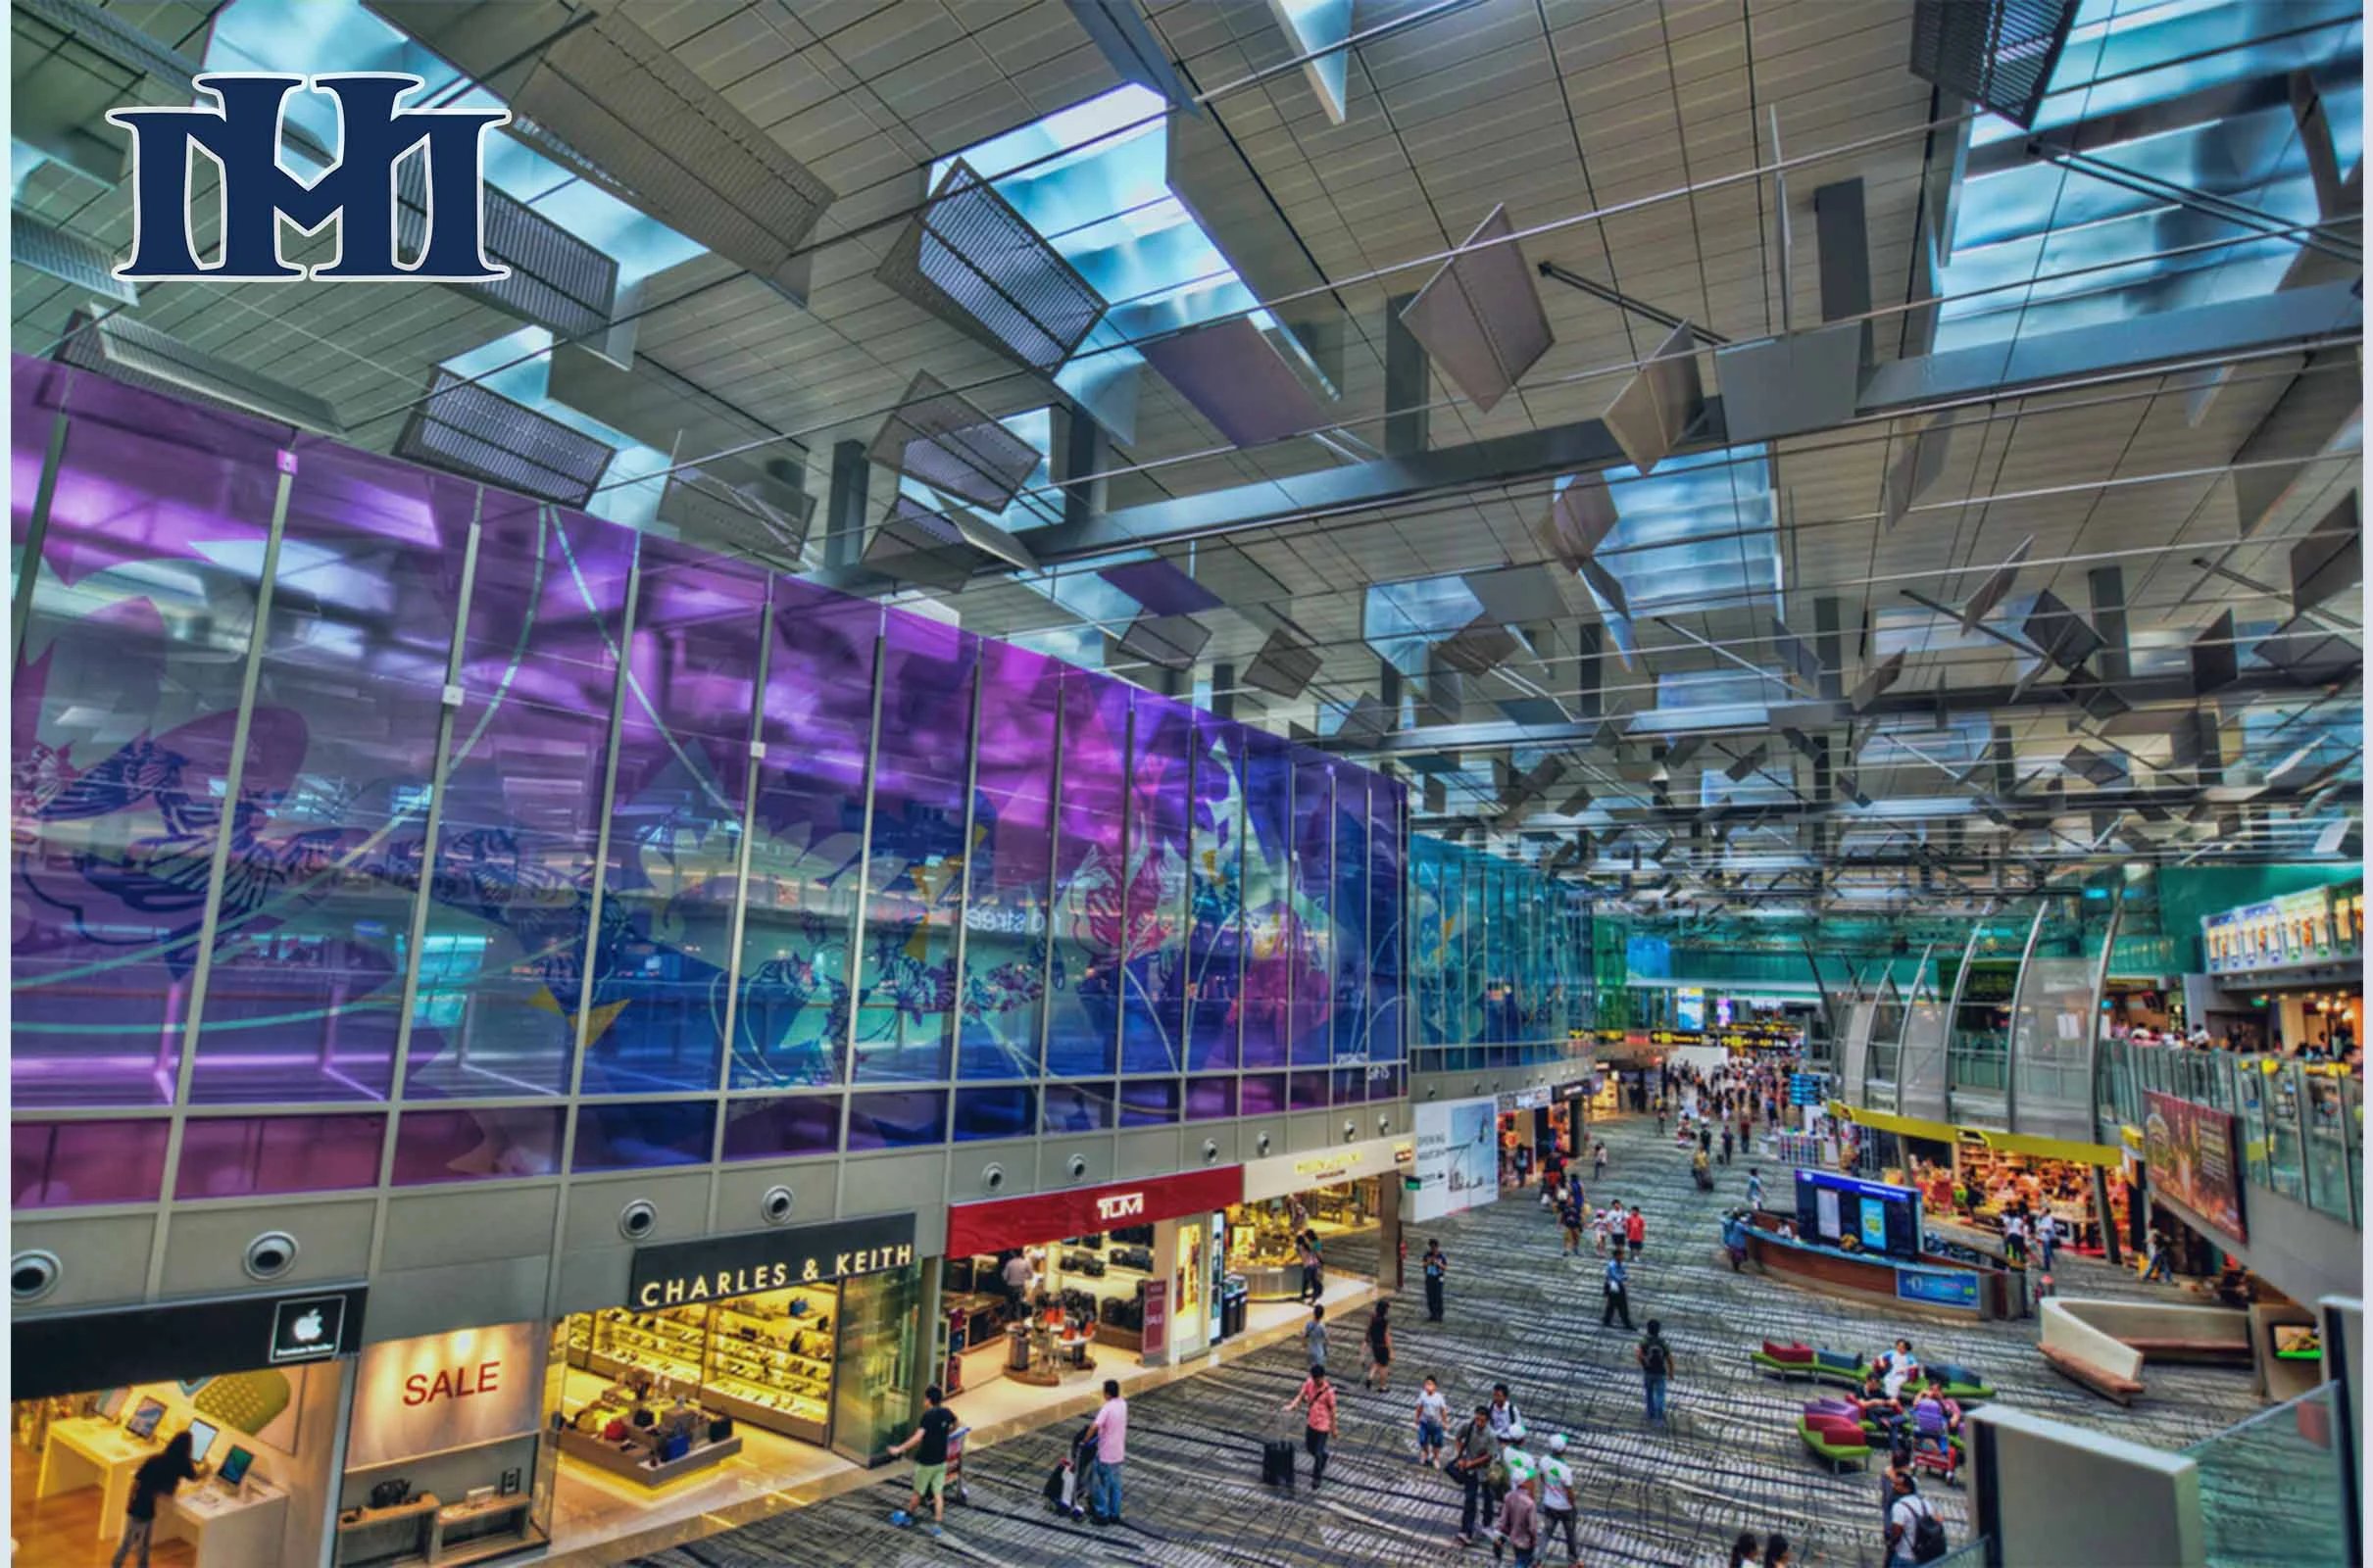 فرودگاه چانگی سنگاپور در یک نگاه